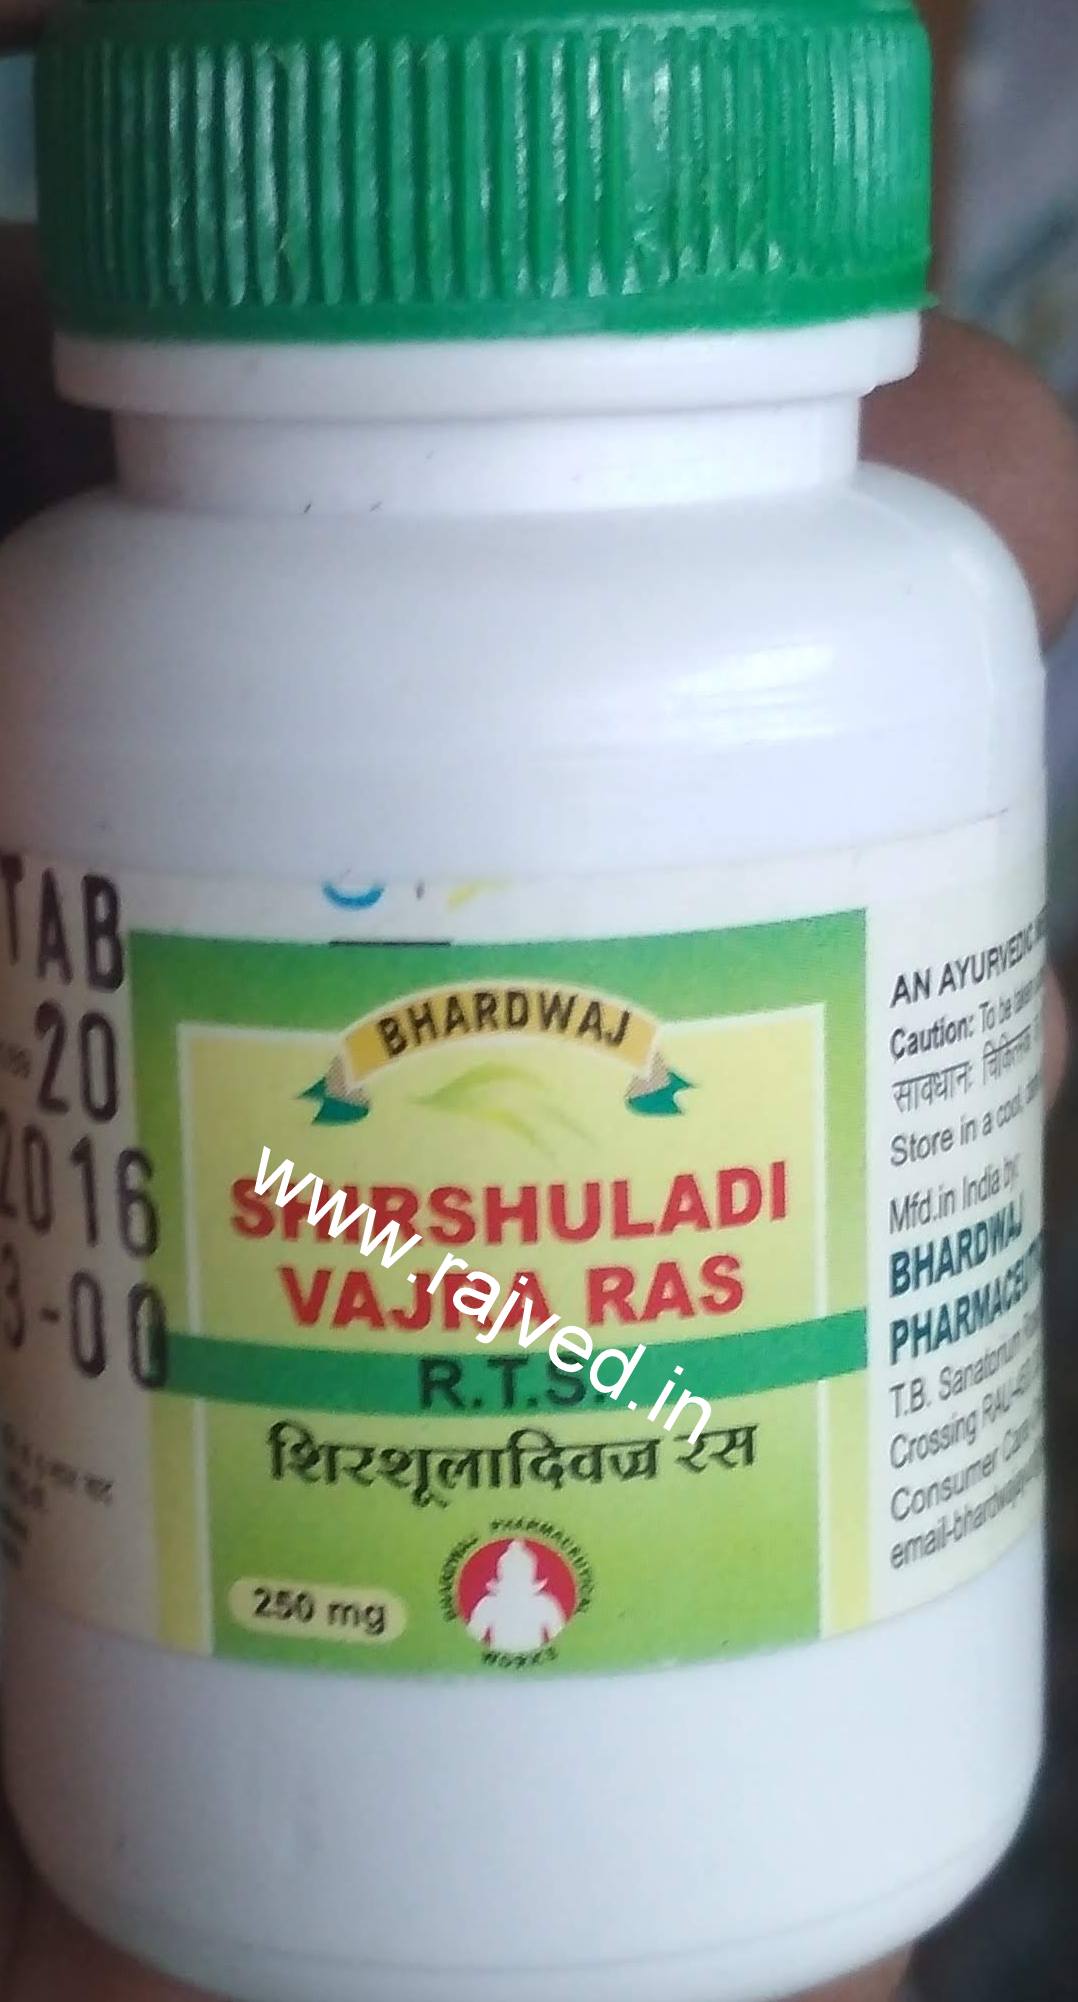 shirshuladivajra ras 250gm upto 20% off bhardwaj pharmaceuticals indore